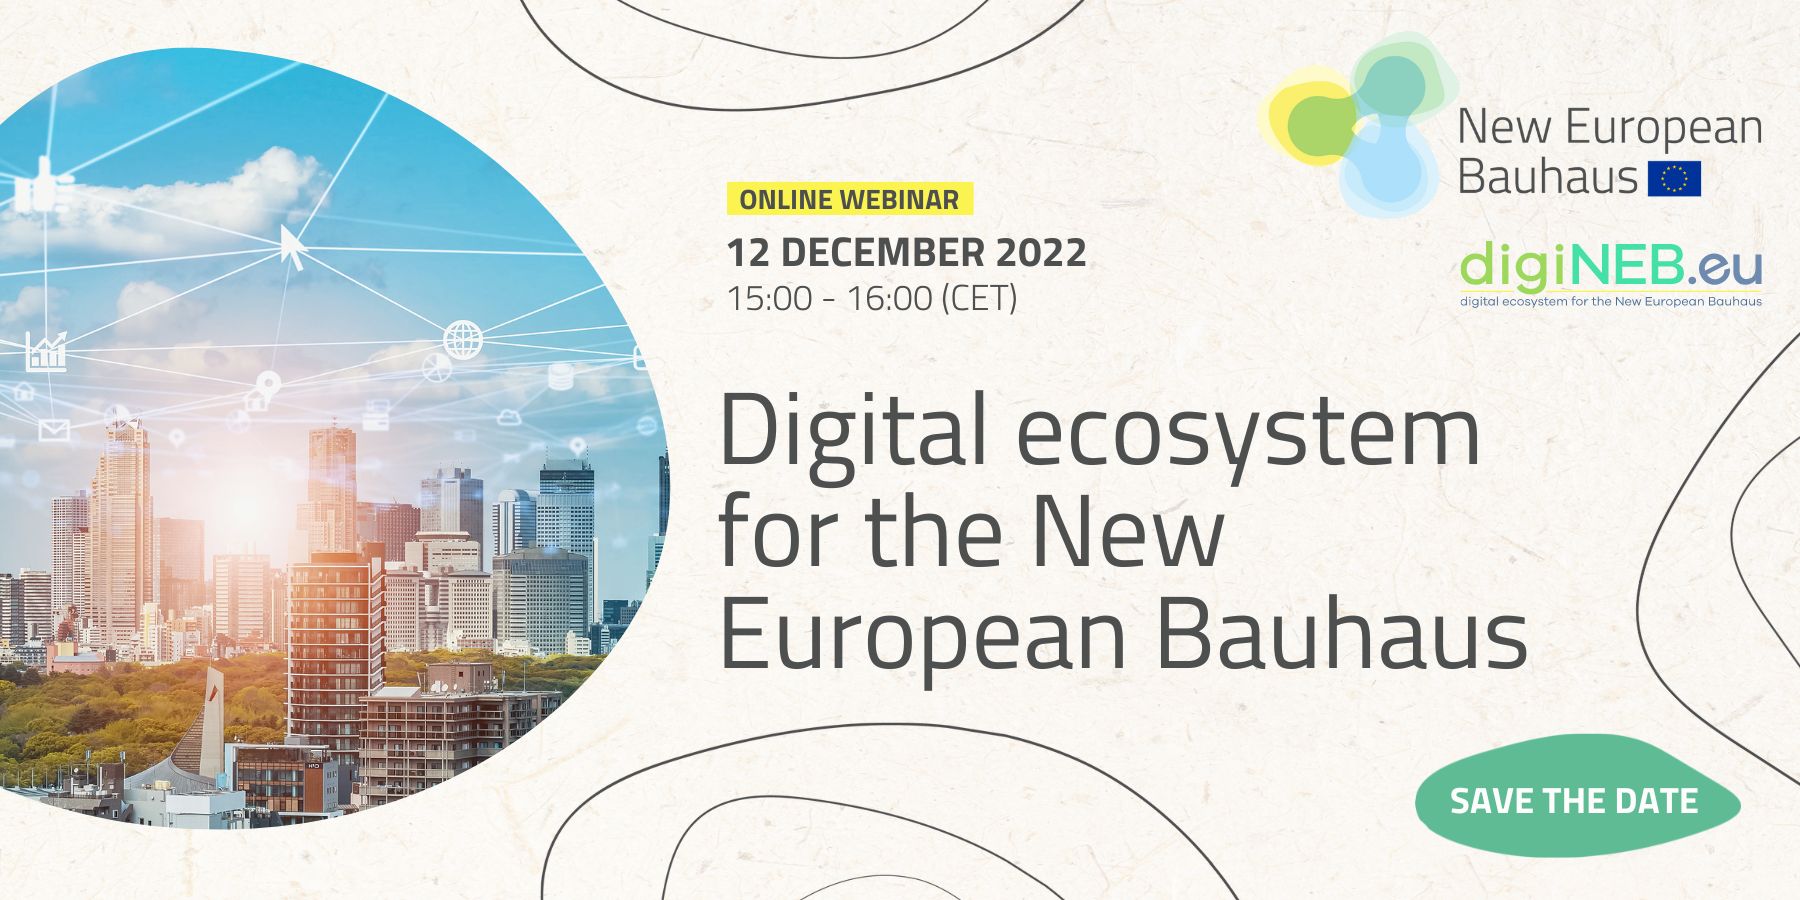 Digital ecosystem for the New European Bauhaus (NEB)